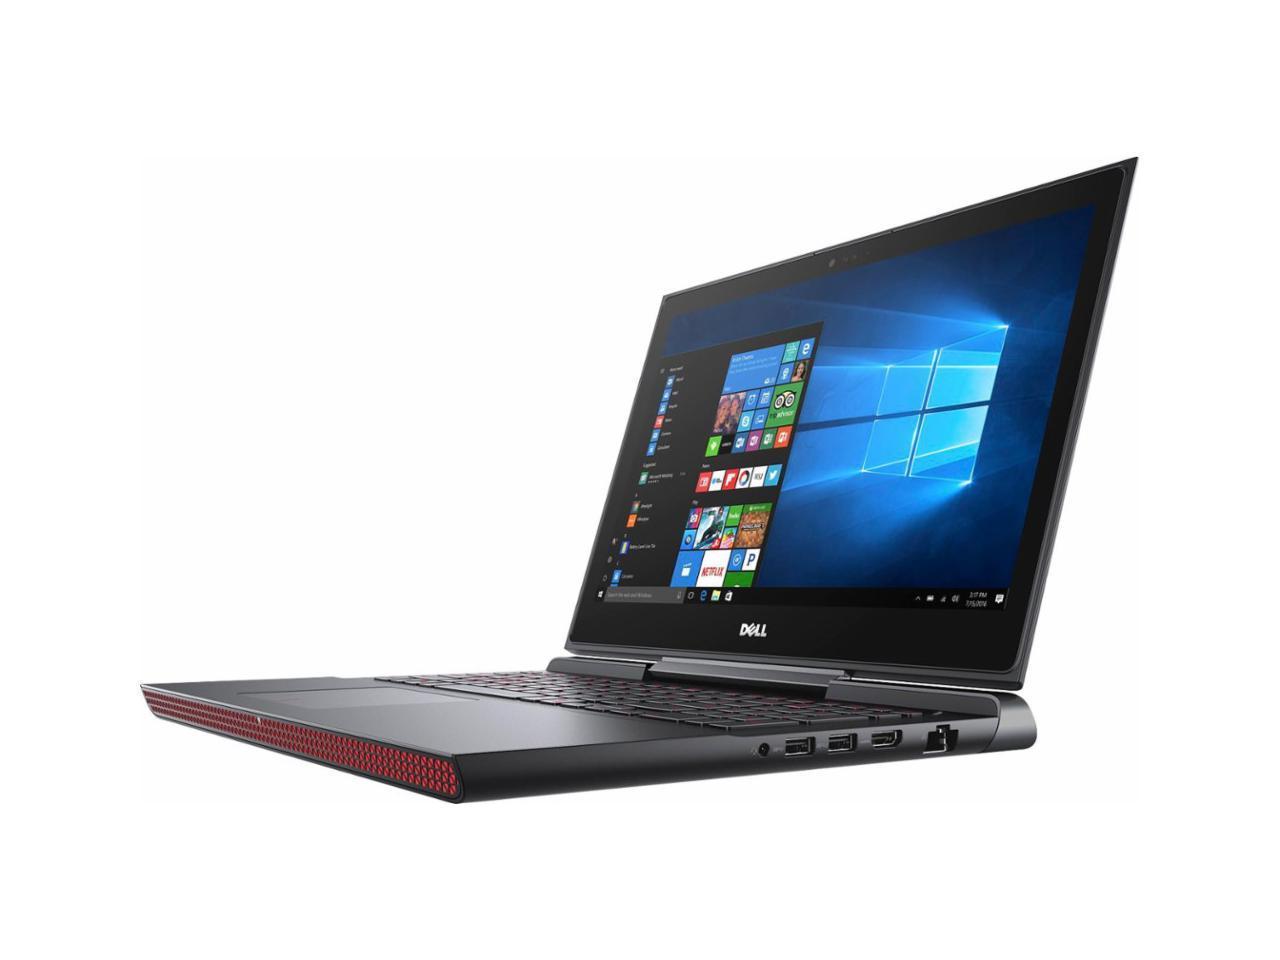 Dell Inspiron Flagship 15.6" Full HD Gaming laptop | Intel Core i5-7300HQ Quad-Core | NVIDIA GeForce GTX 1050 Ti | 8GB RAM | 256GB SSD | Windows 10 | Windows Mixed Reality Ultra Ready